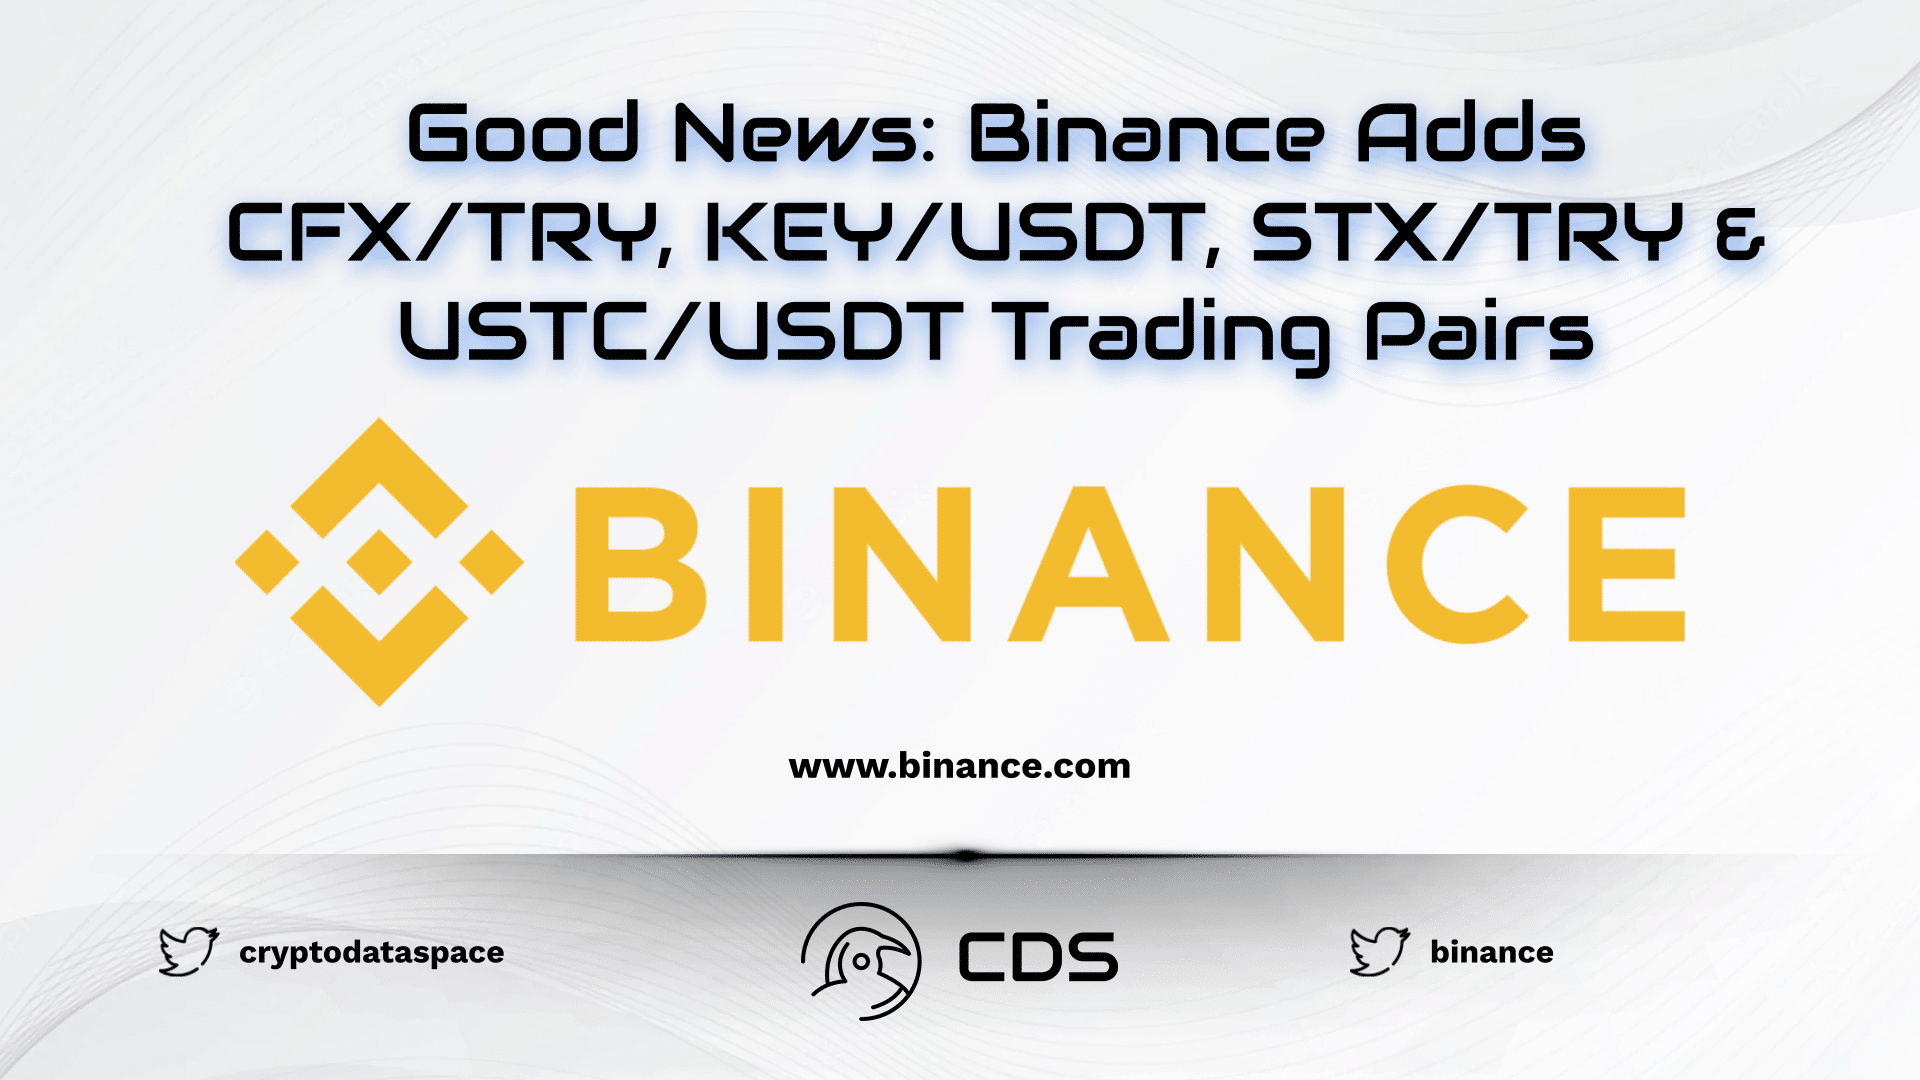 Good News Binance Adds CFXTRY, KEYUSDT, STXTRY & USTCUSDT Trading Pairs